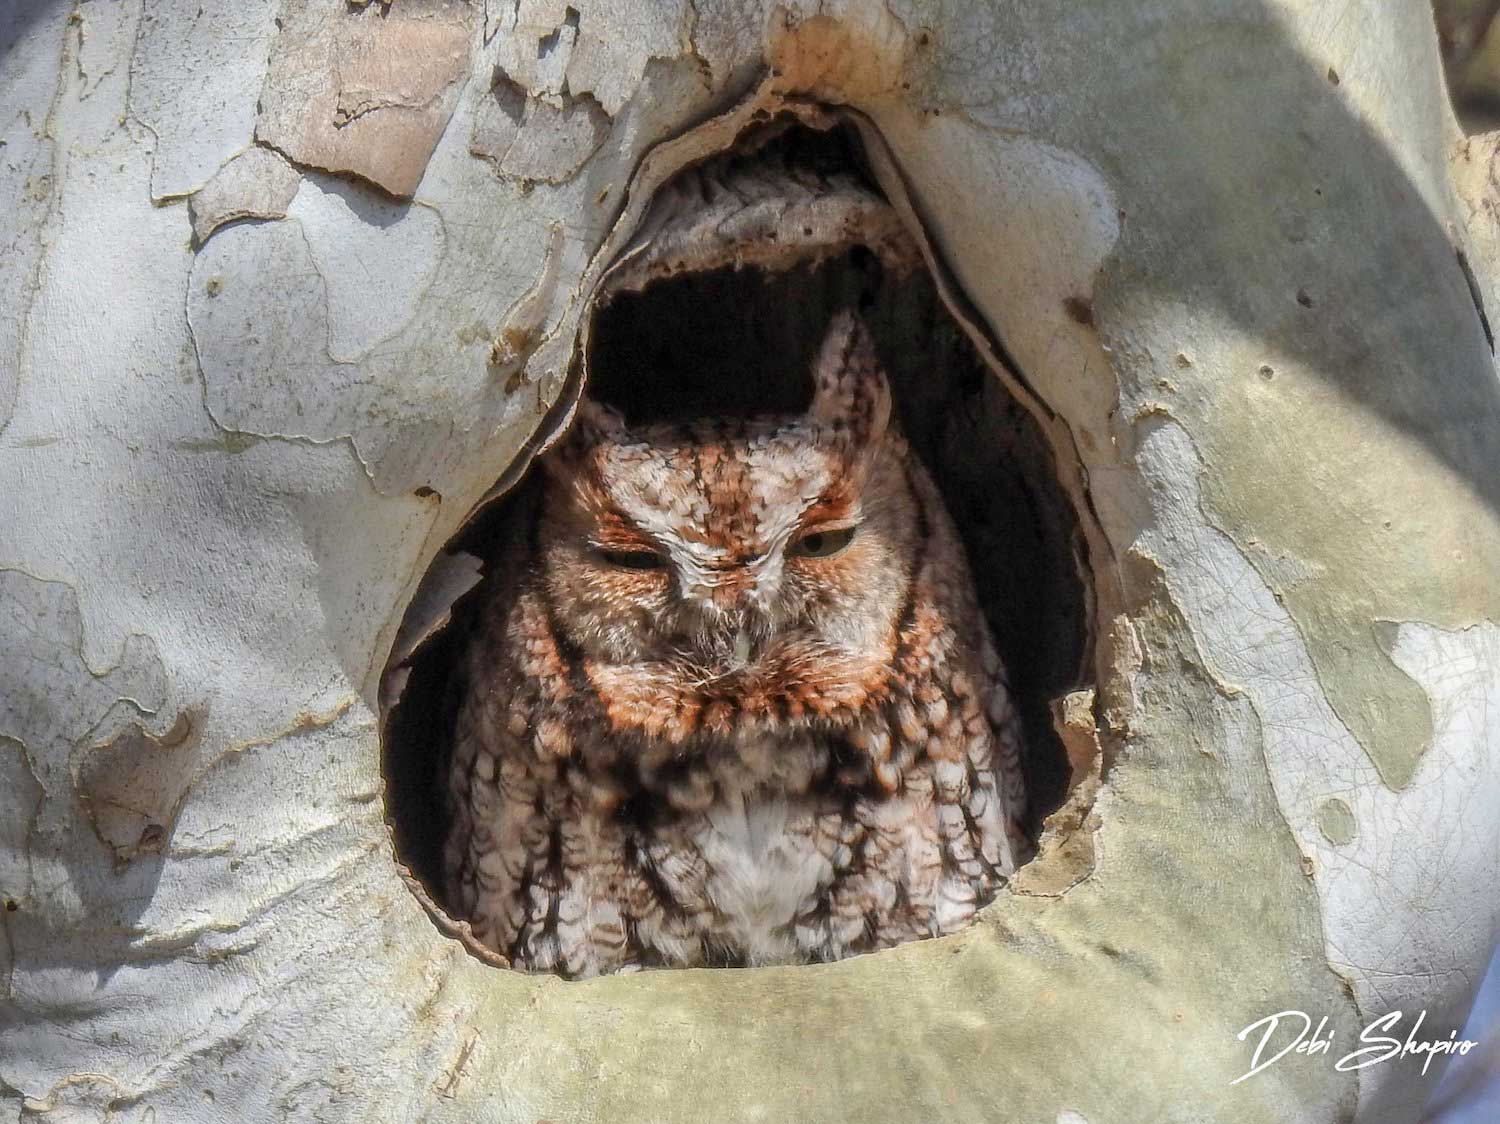 A screech owl in a tree cavity.